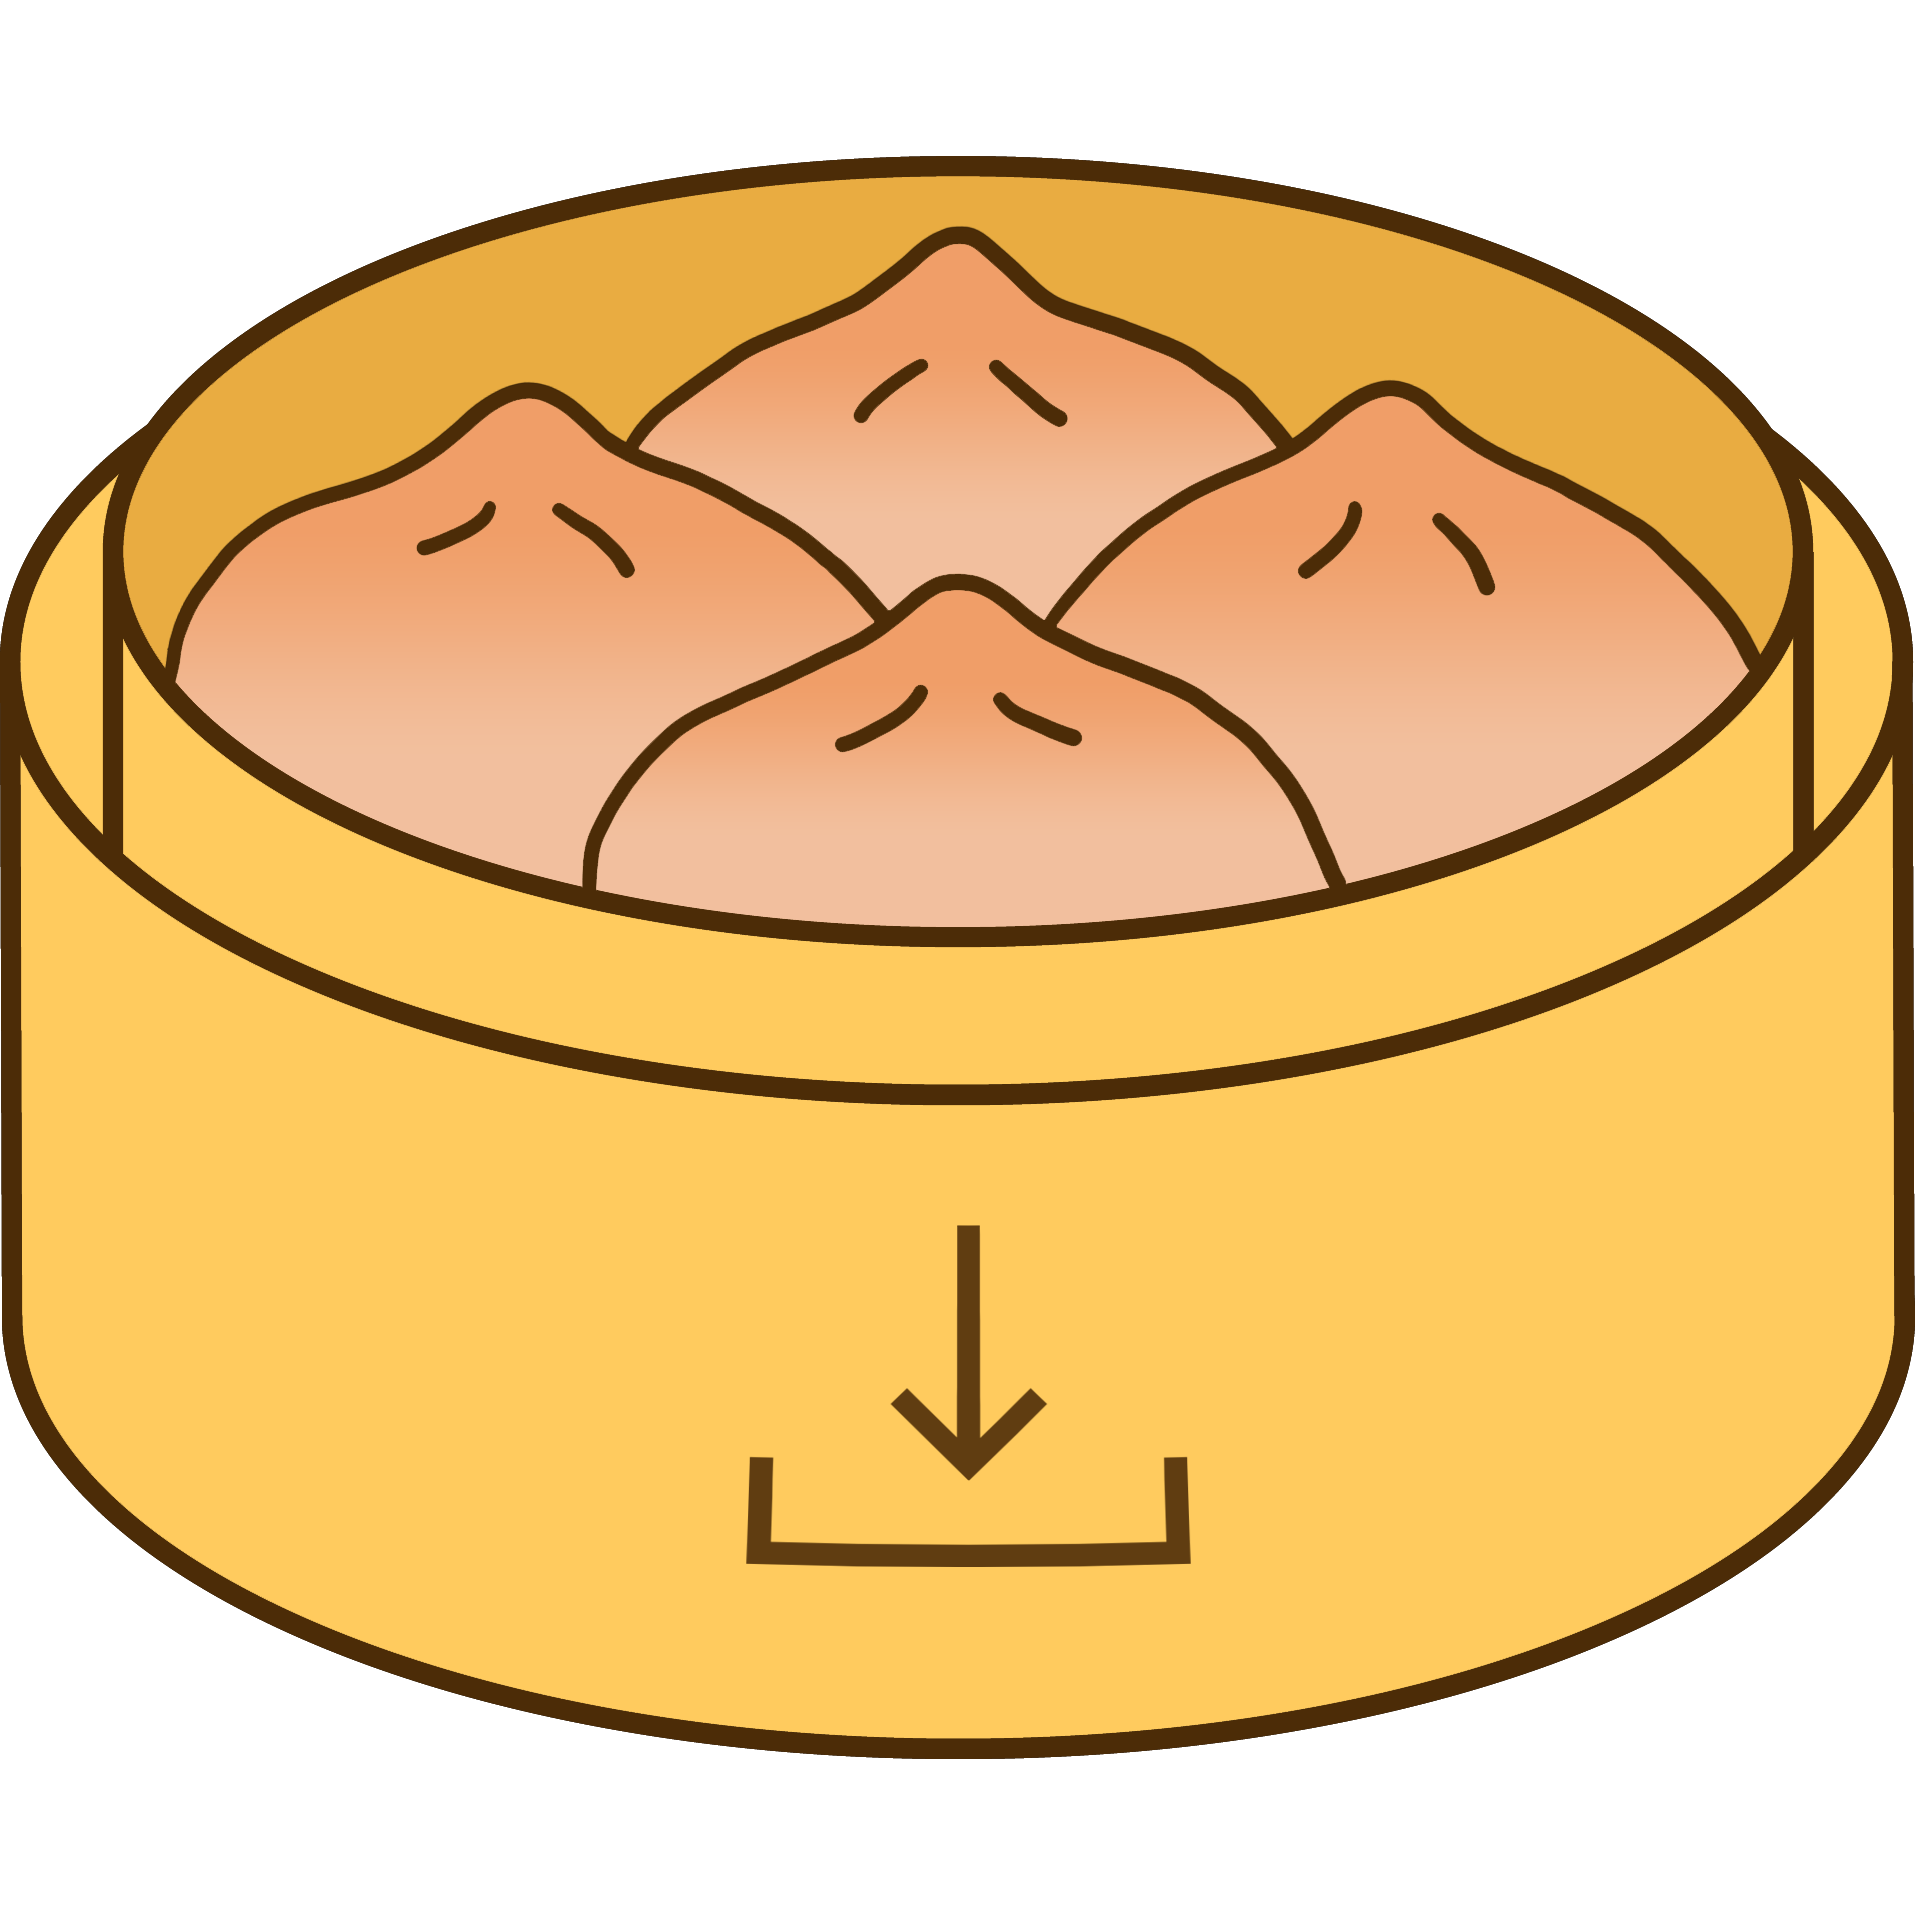 dumpling logo